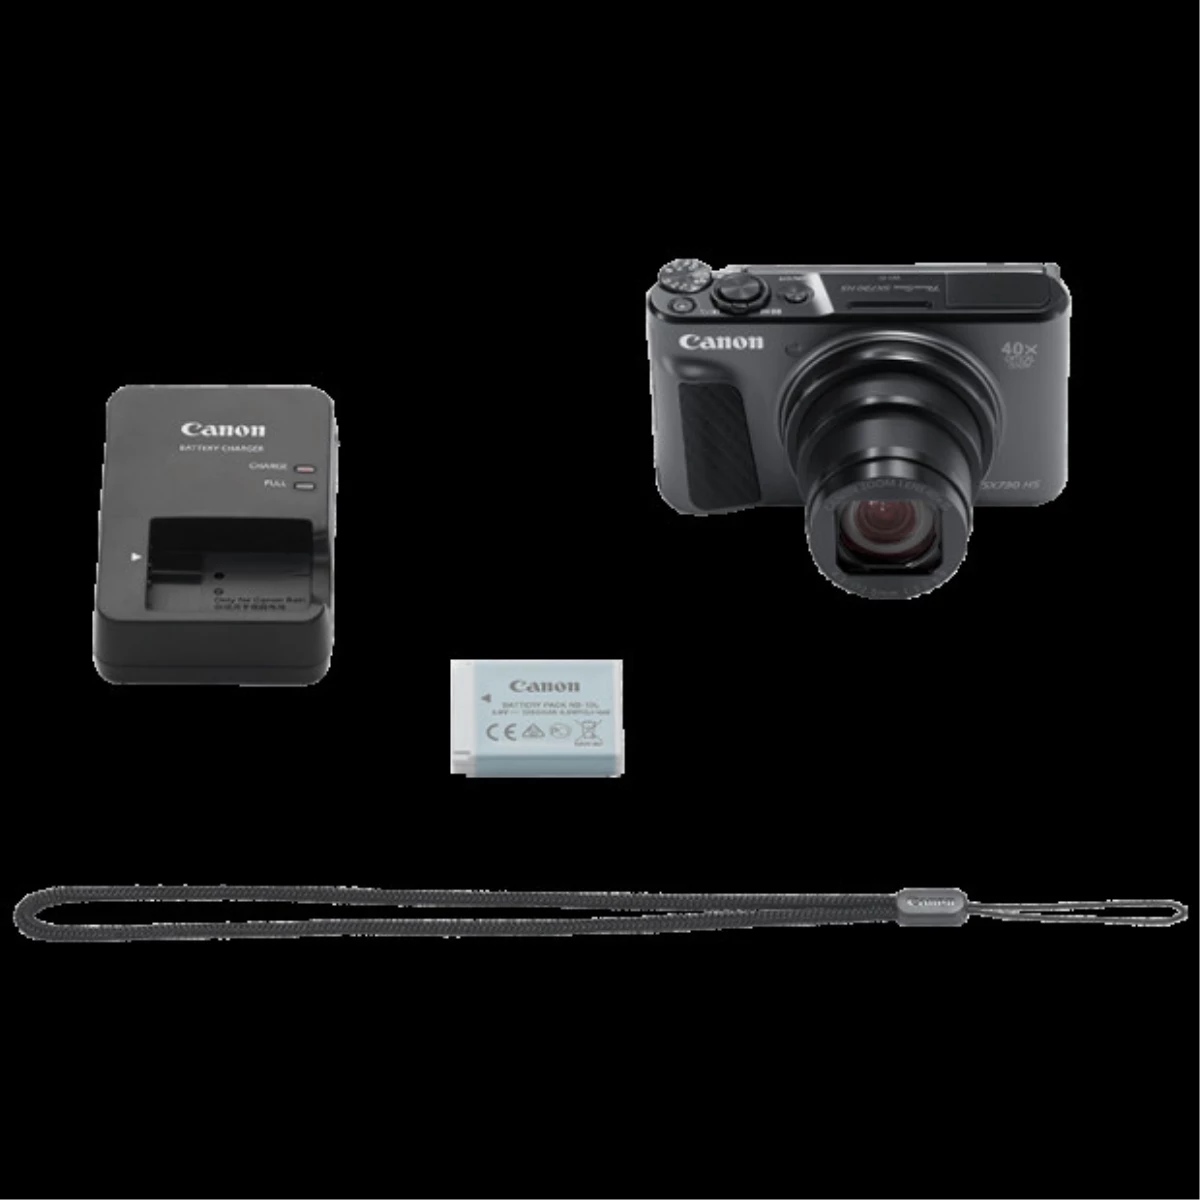 Canon Powershow Sx730 Hs, Yeni İnce Süper Zoom Özellikli